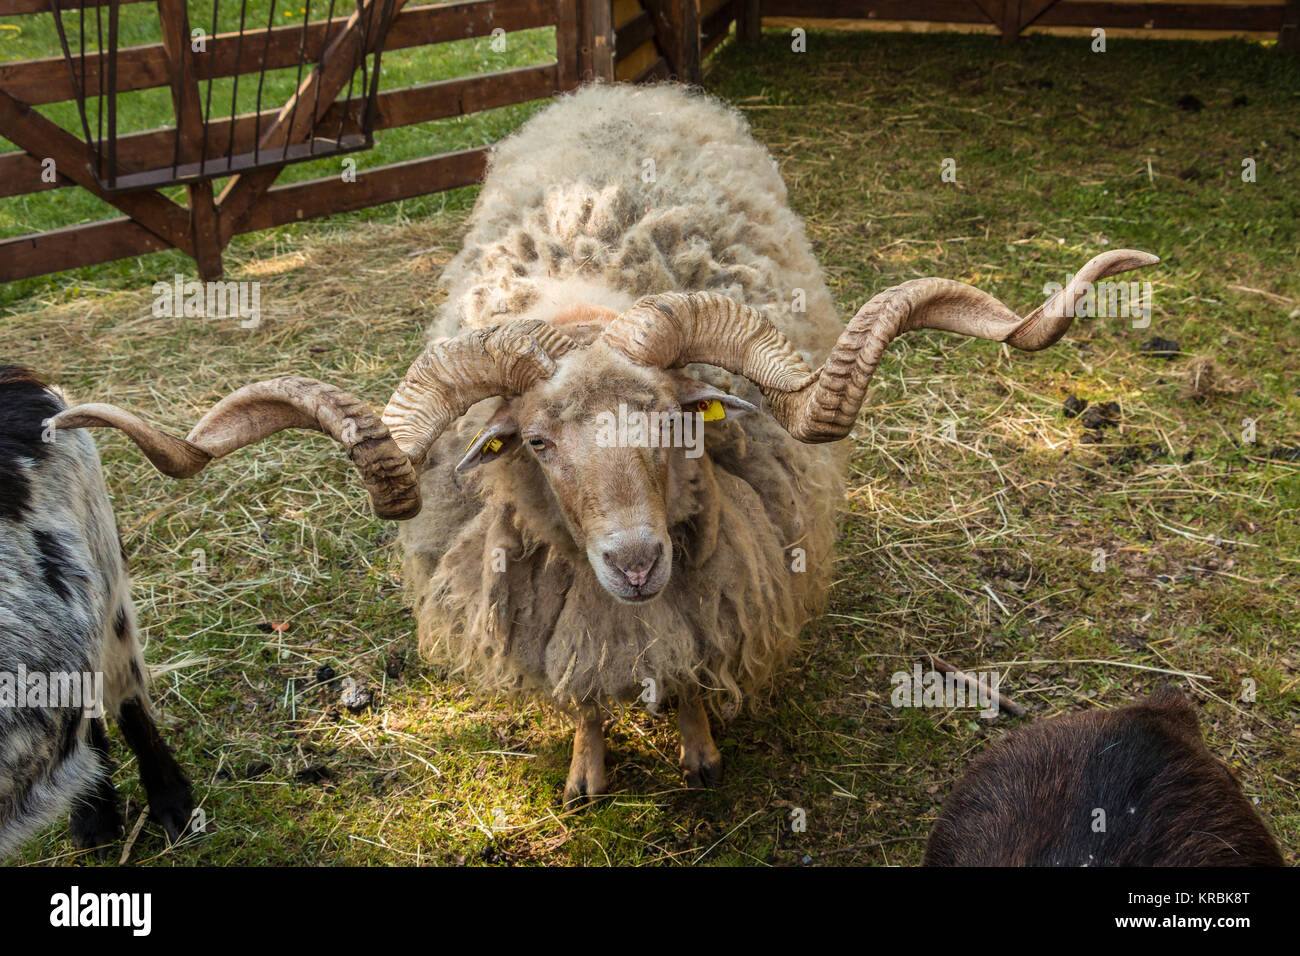 Shaggy racka sheep with big twisted horns Stock Photo